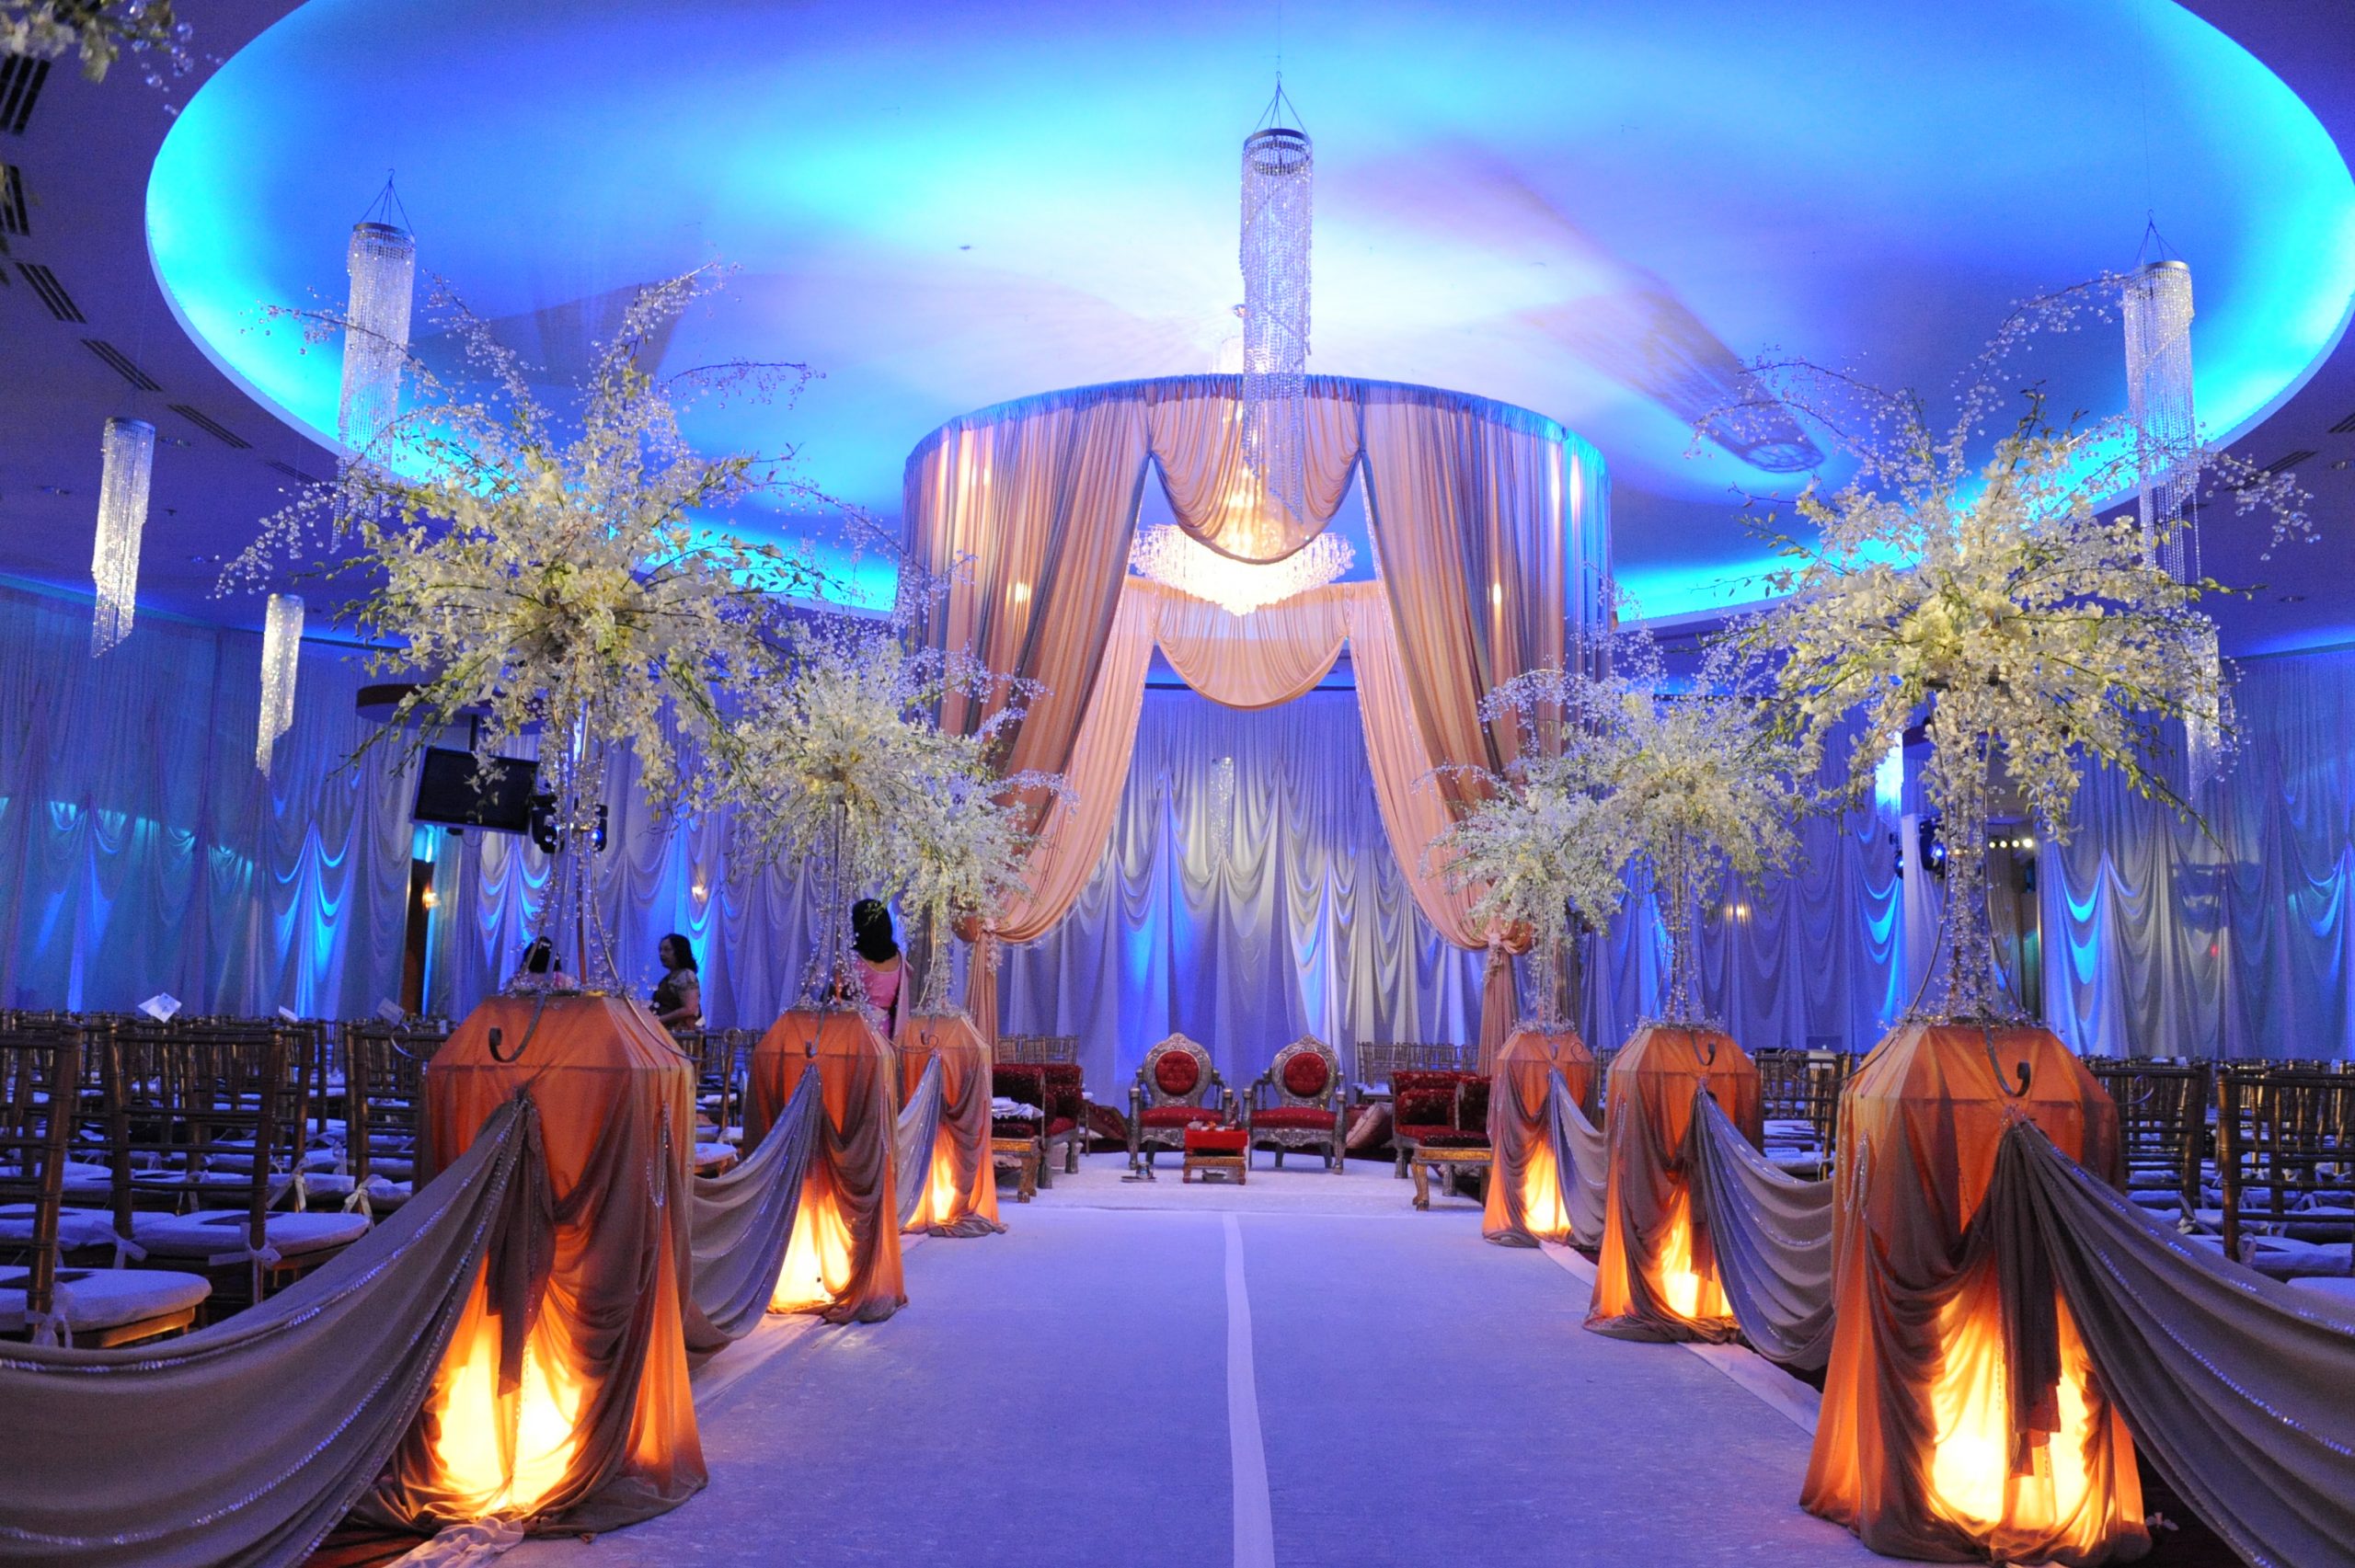 List of Best Budget Banquet Halls in Gurgaon for Wedding